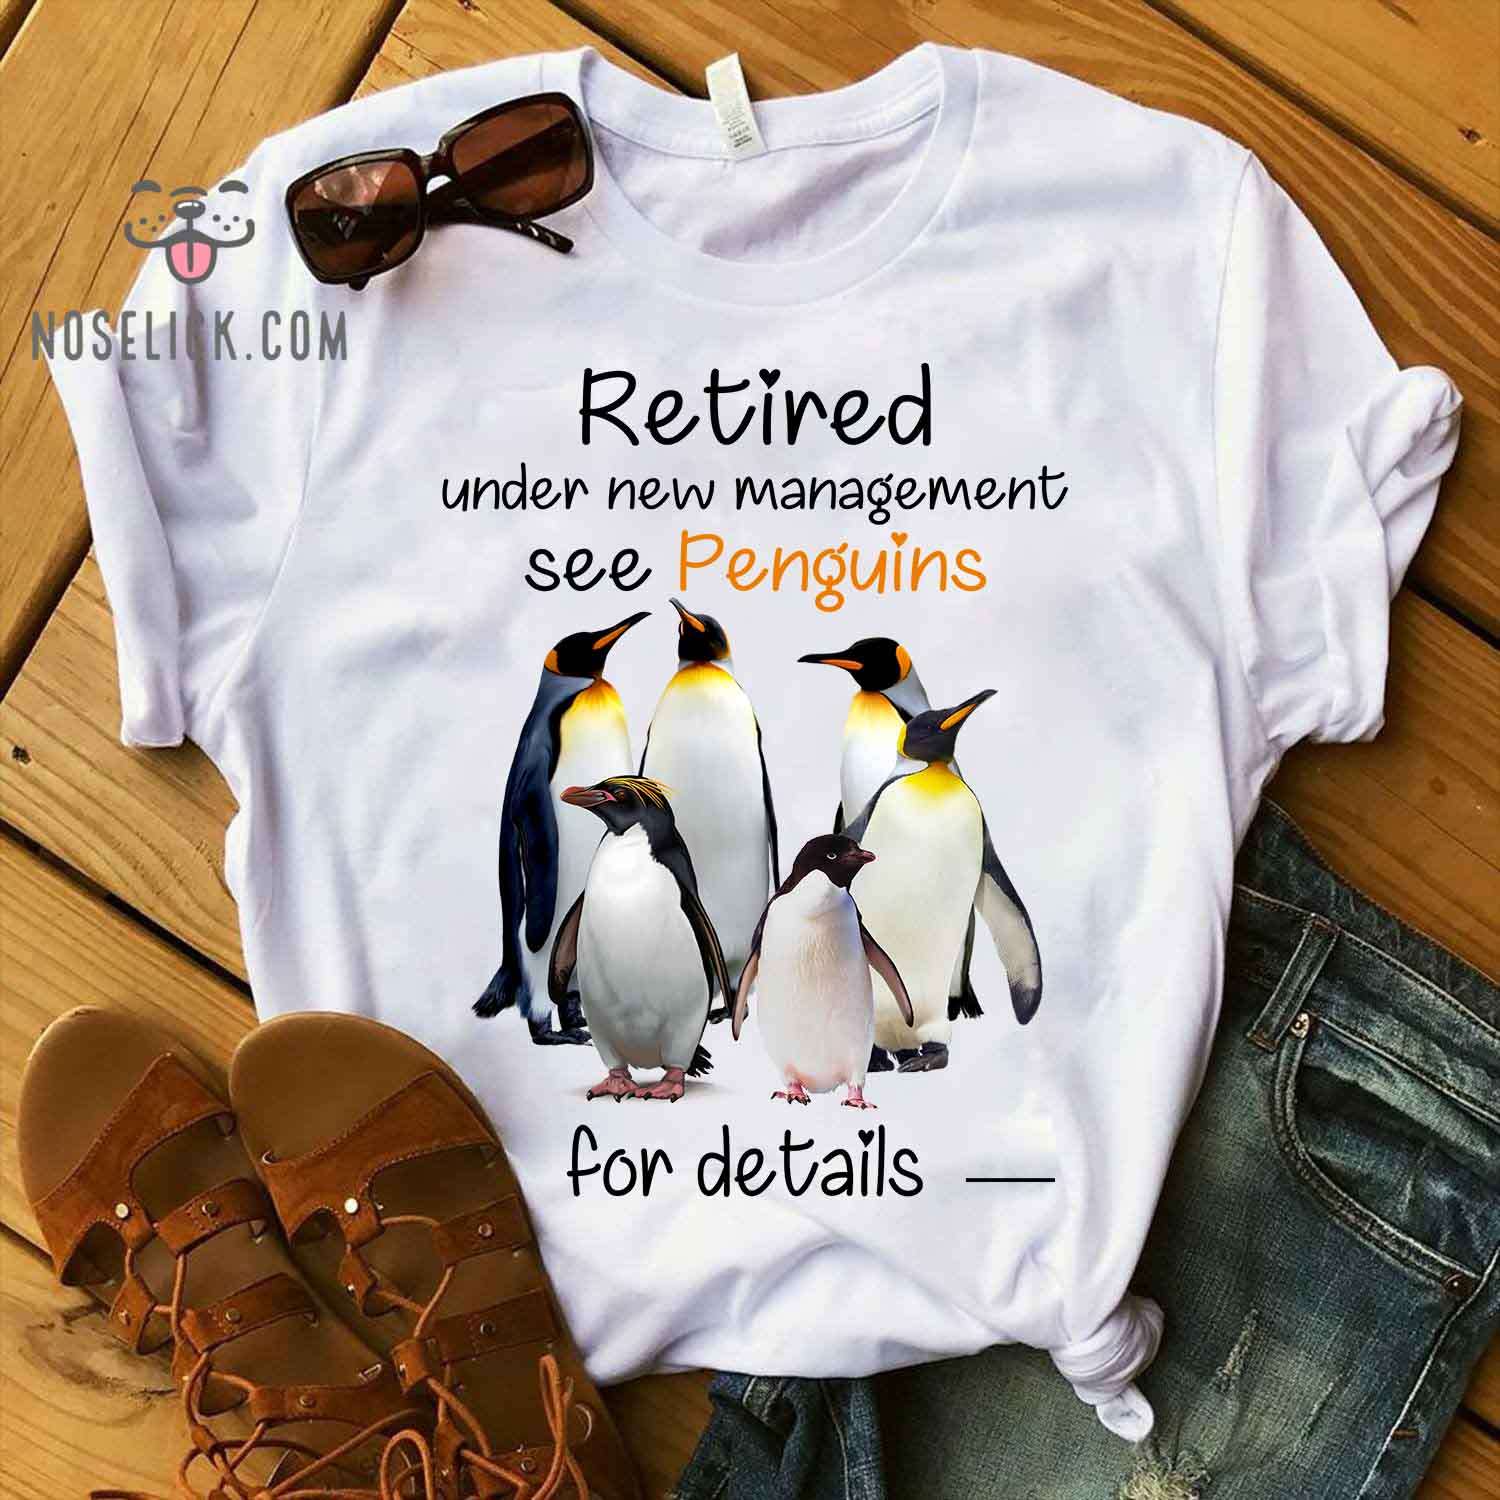 Retired under new management see penguins for details - Retired person, penguin animal lover